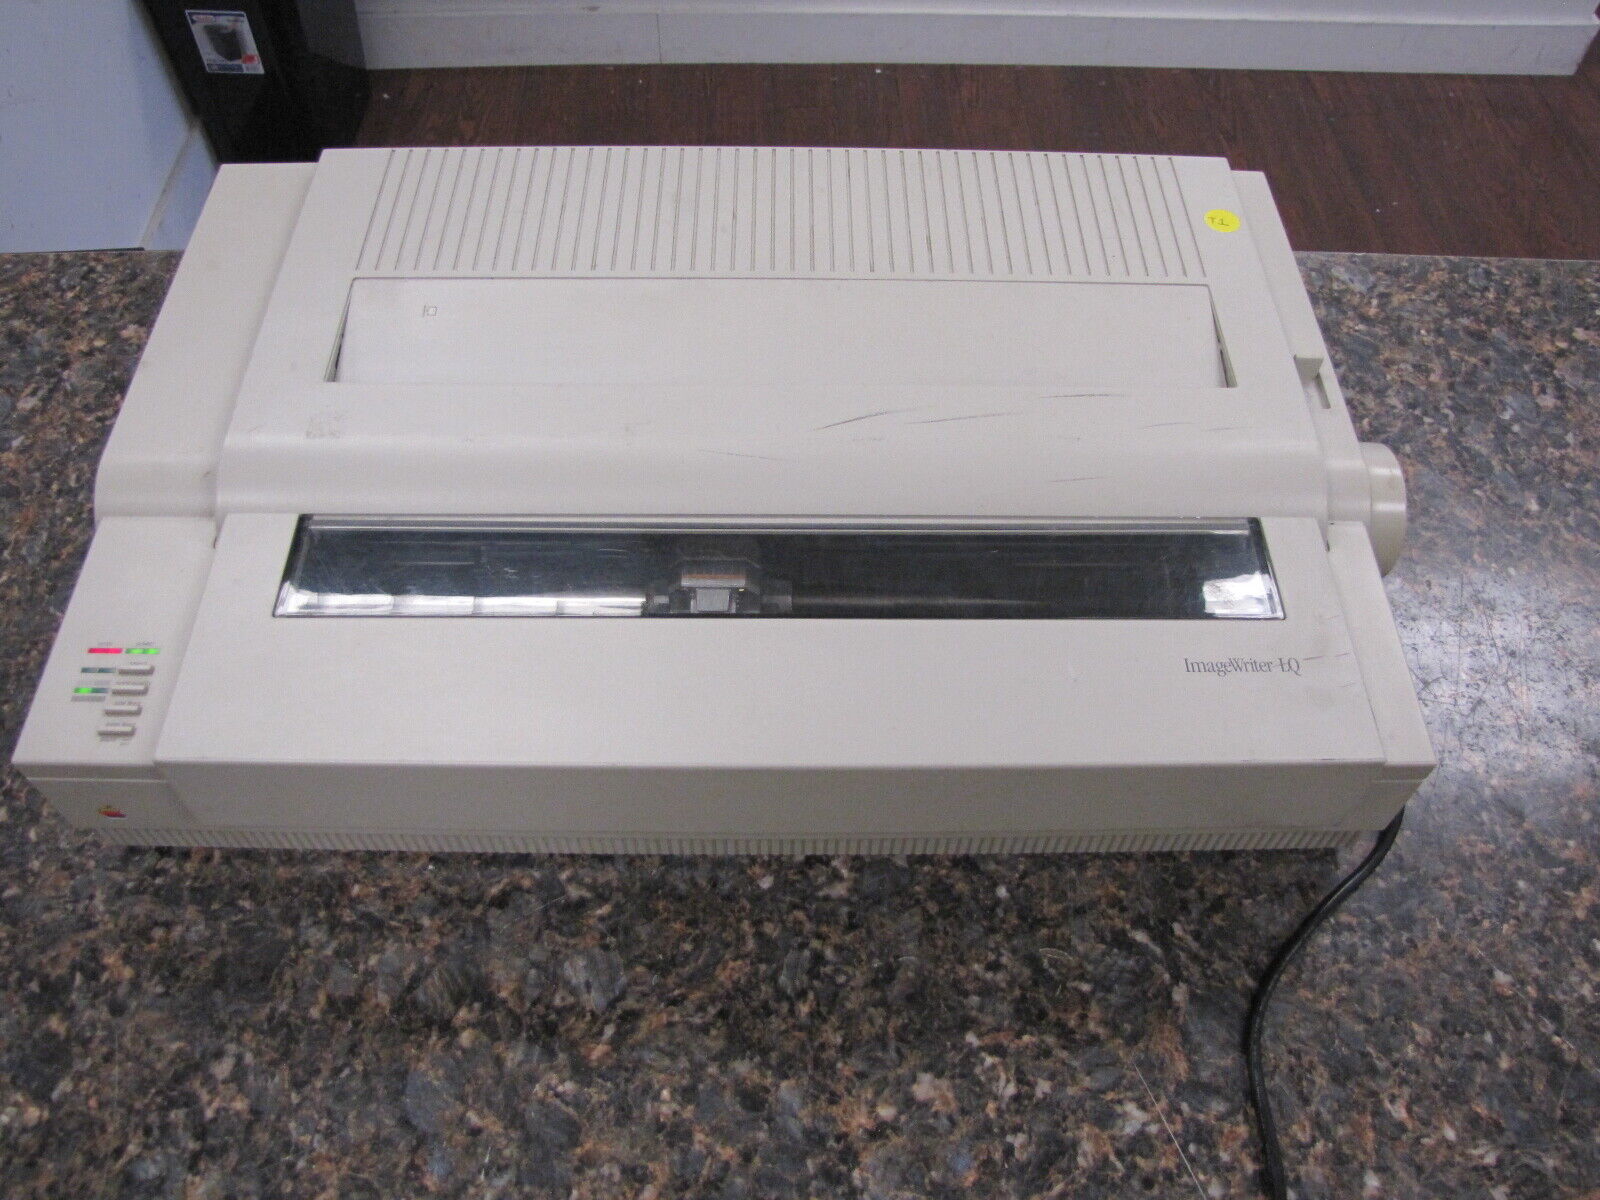 Vintage Apple ImageWriter LQ A9M0340 Dot Matrix Printer - tested working